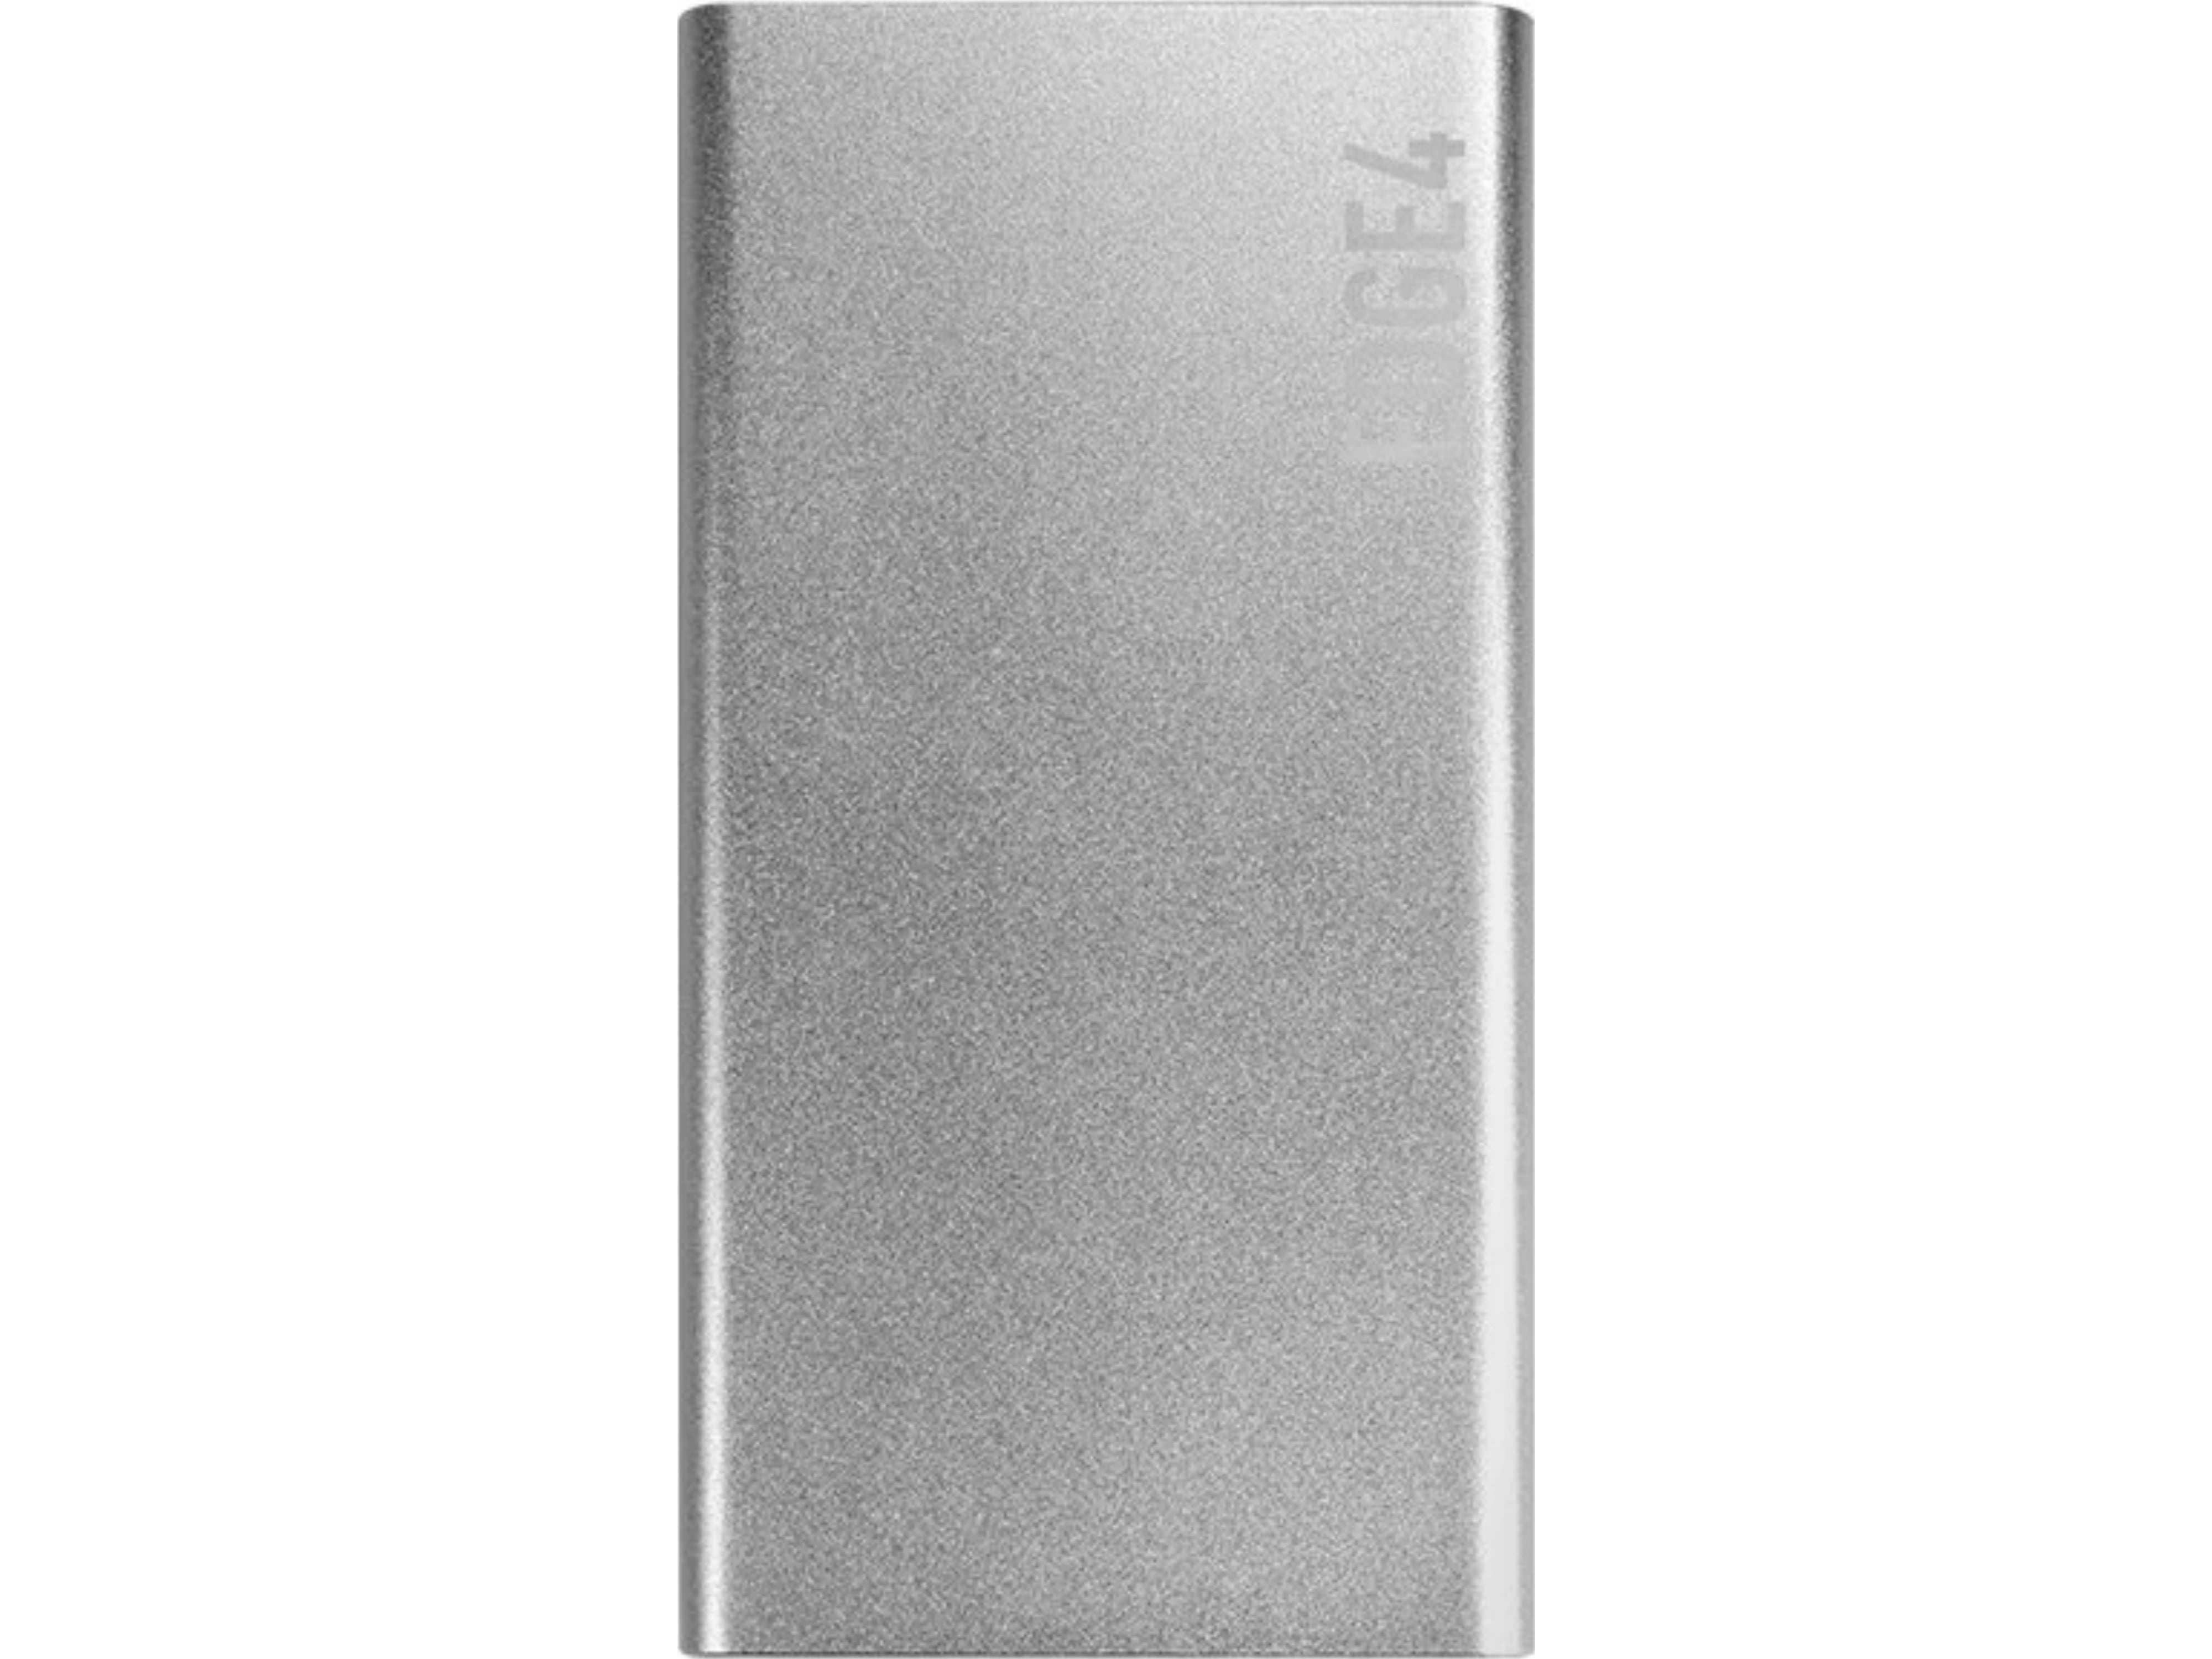 Внешний аккумулятор 4500 mAh Partner EDGE4 (Серебряный)